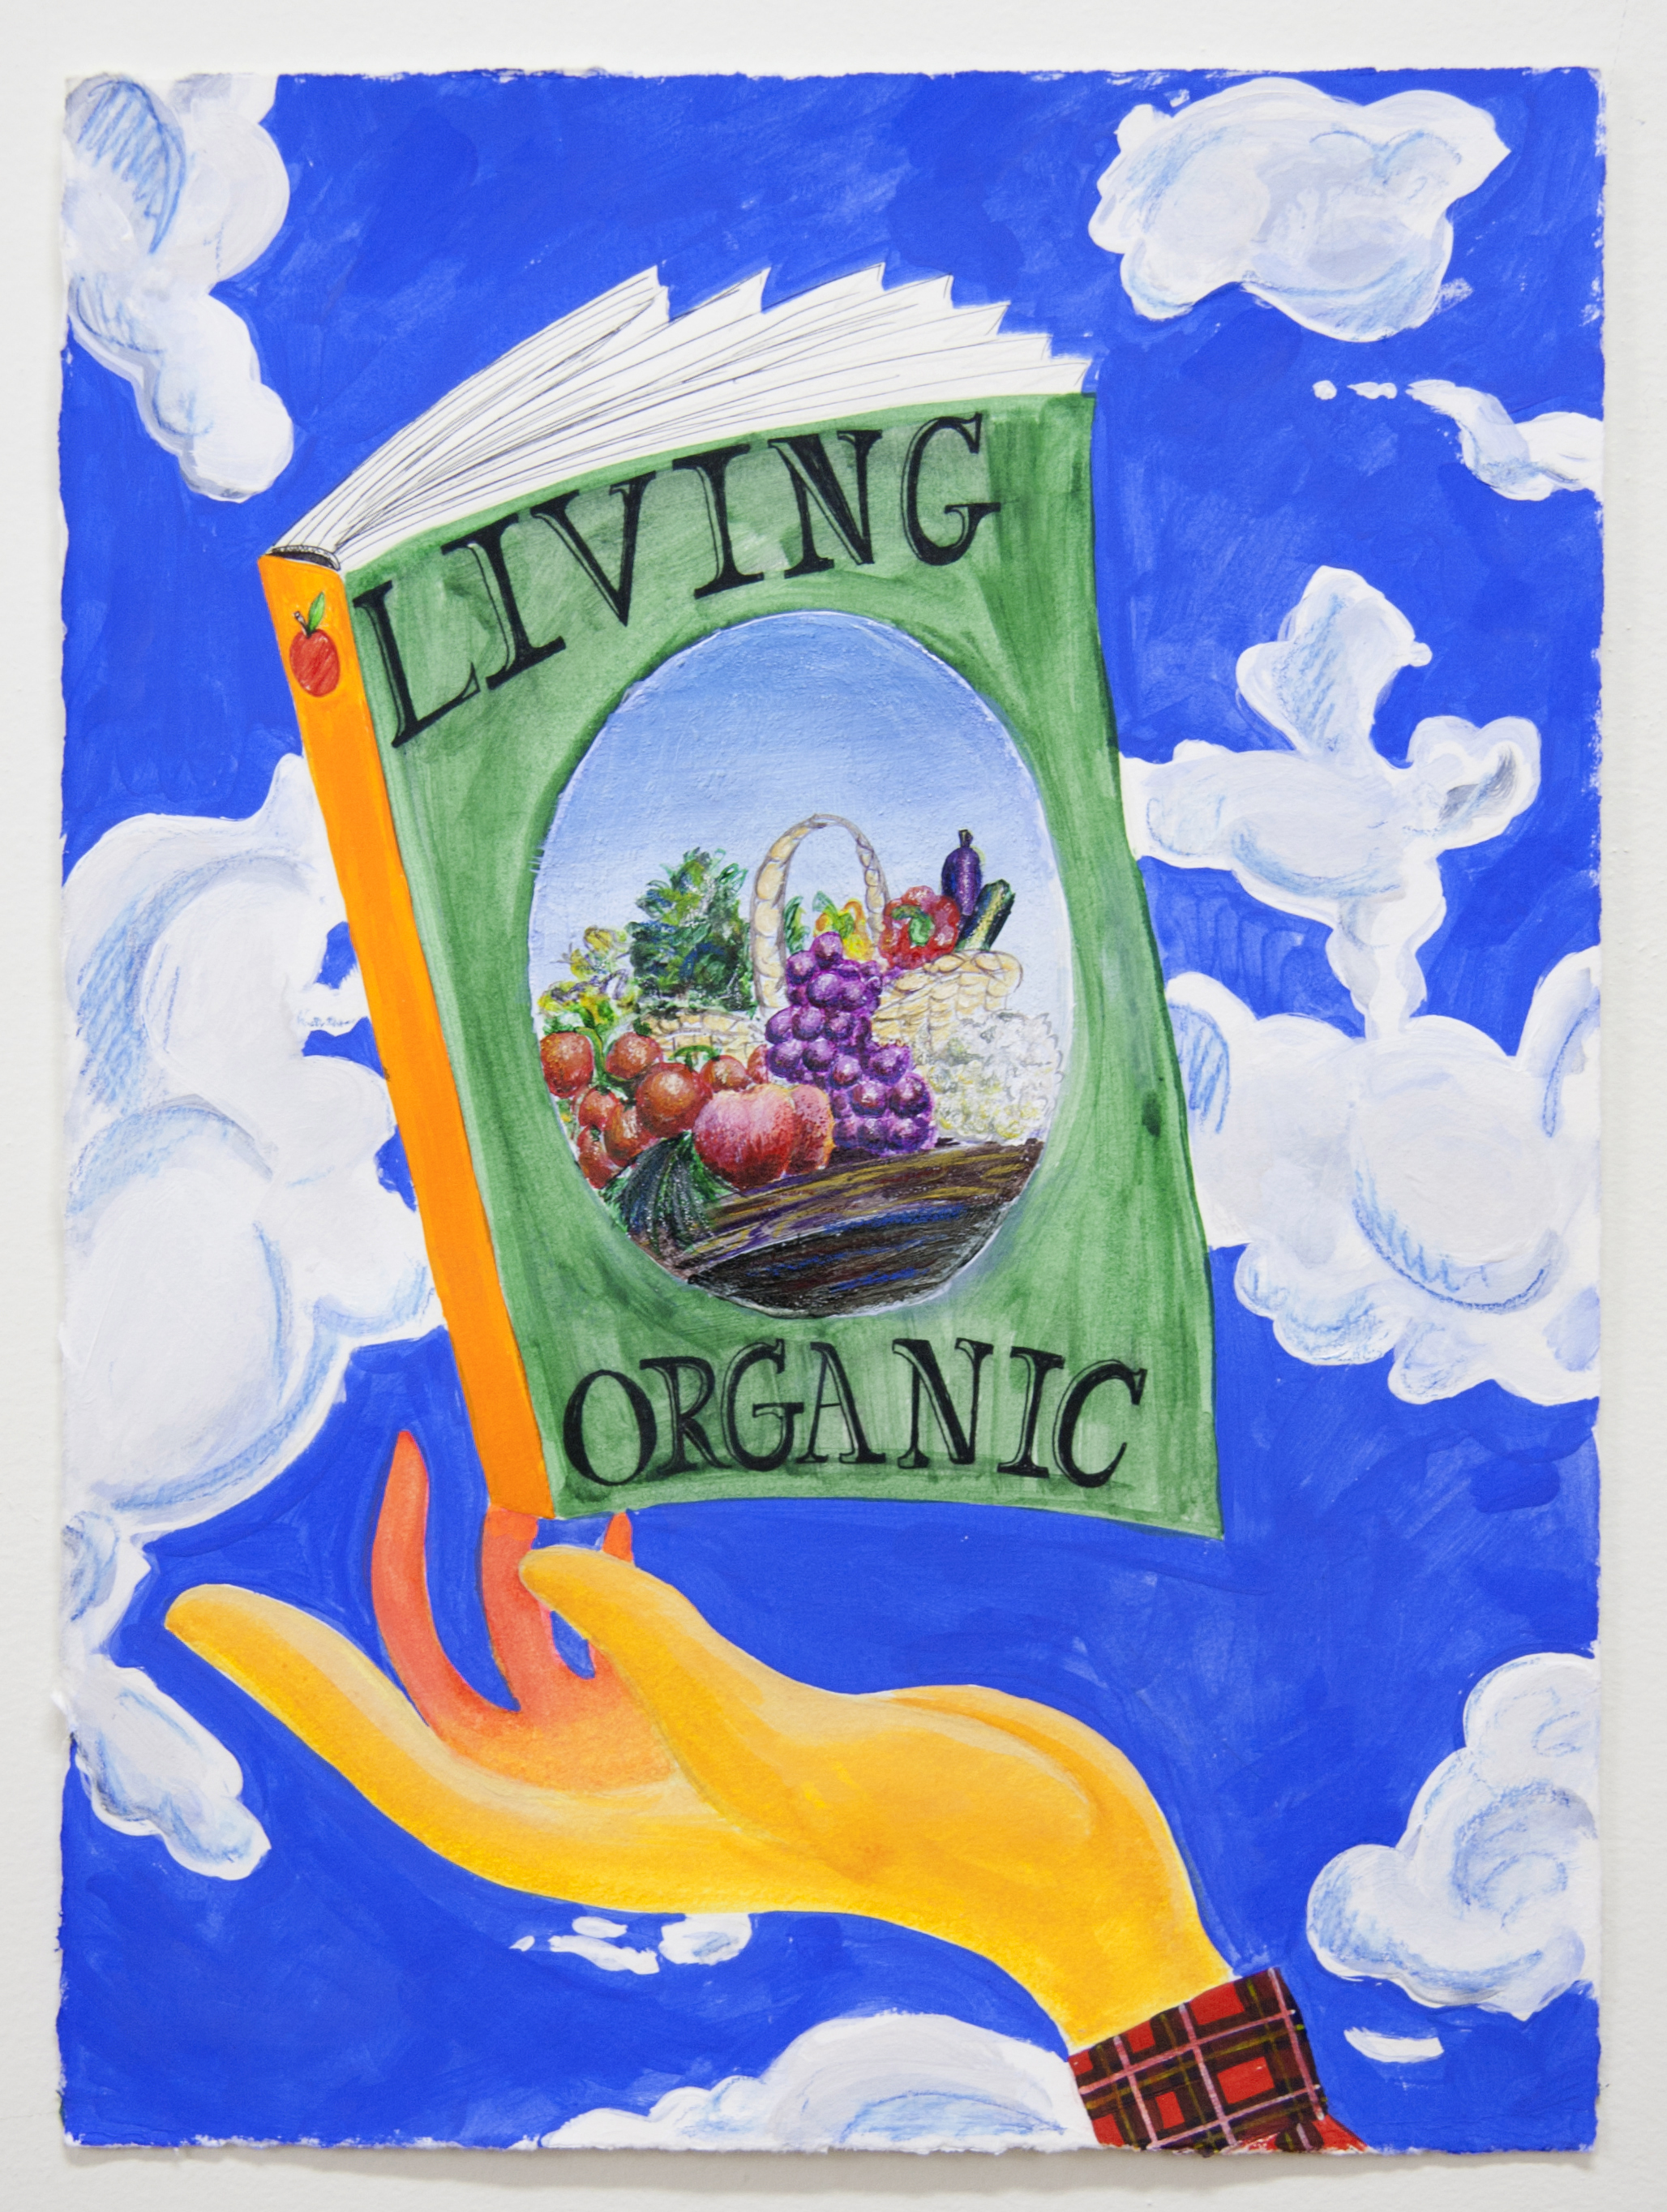 Living Organic